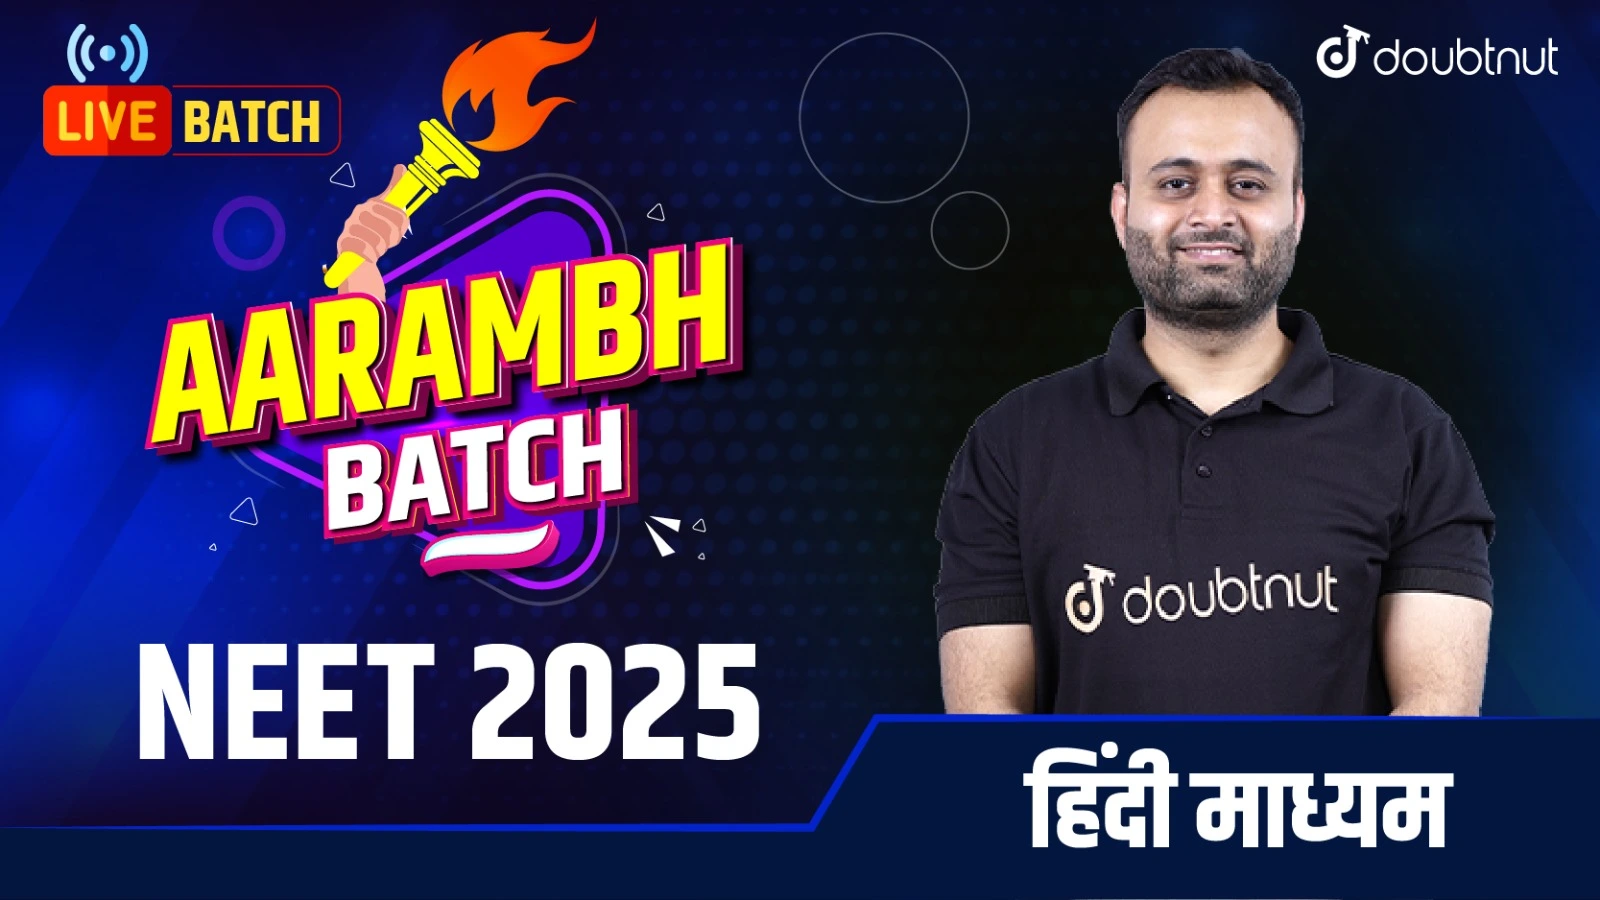 NEET 2025 | AARAMBH Batch